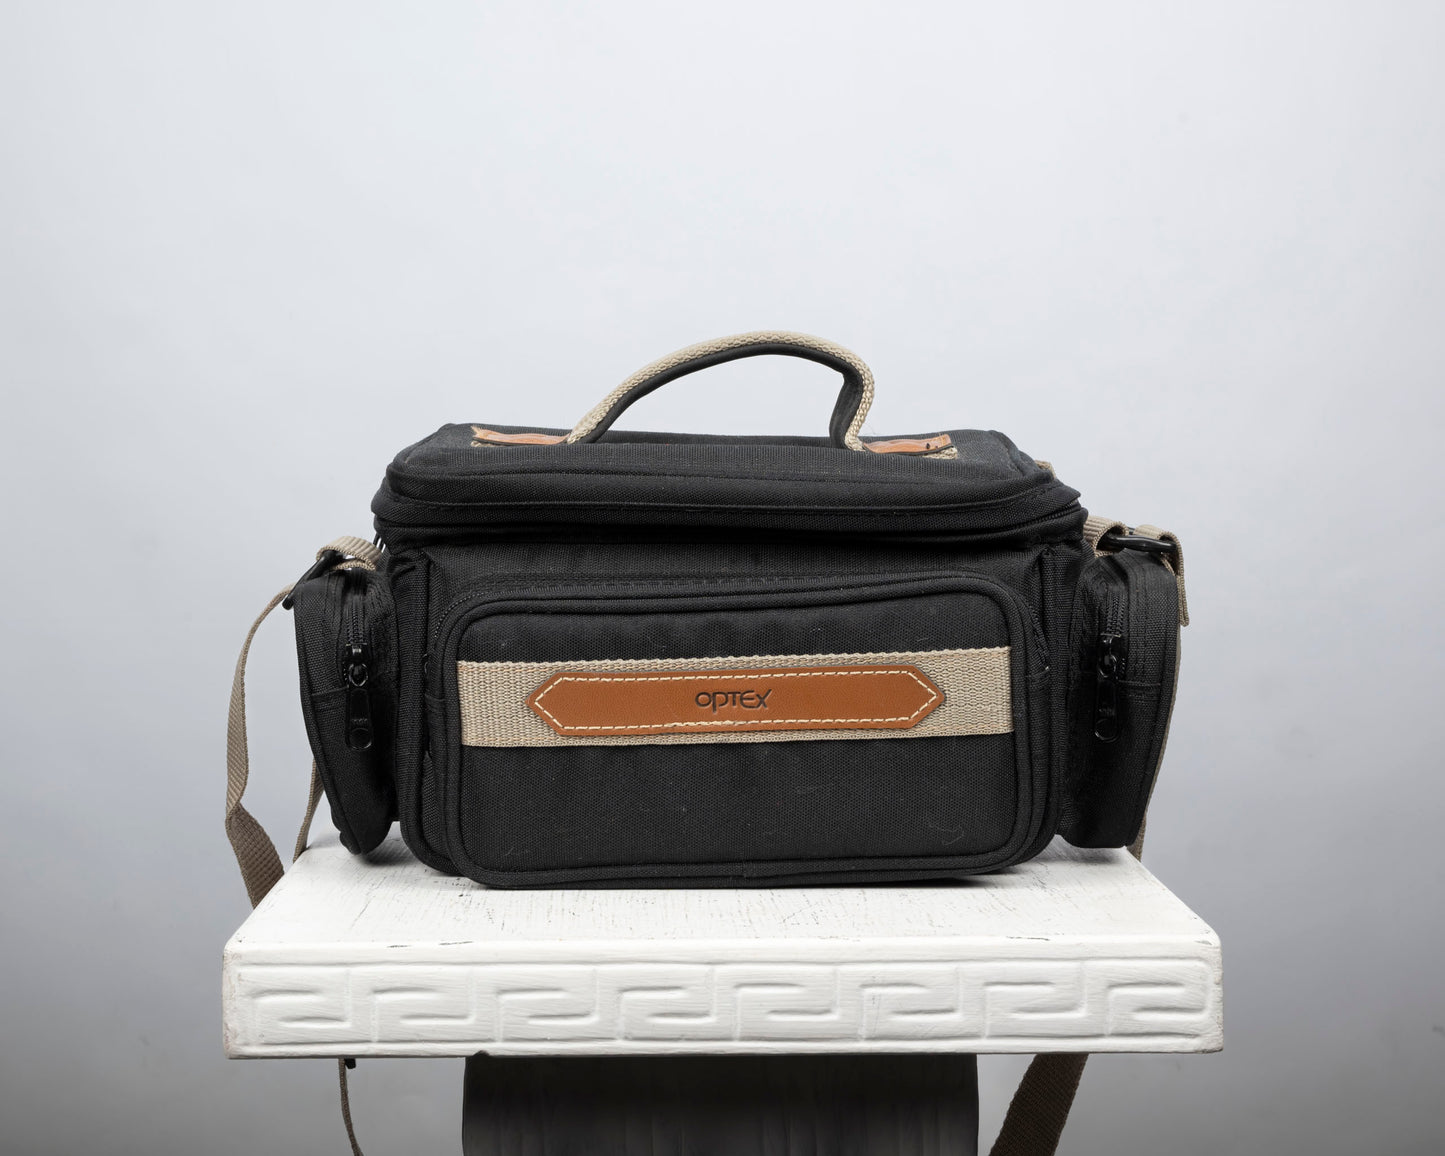 Optex mid-sized black and tan camera bag